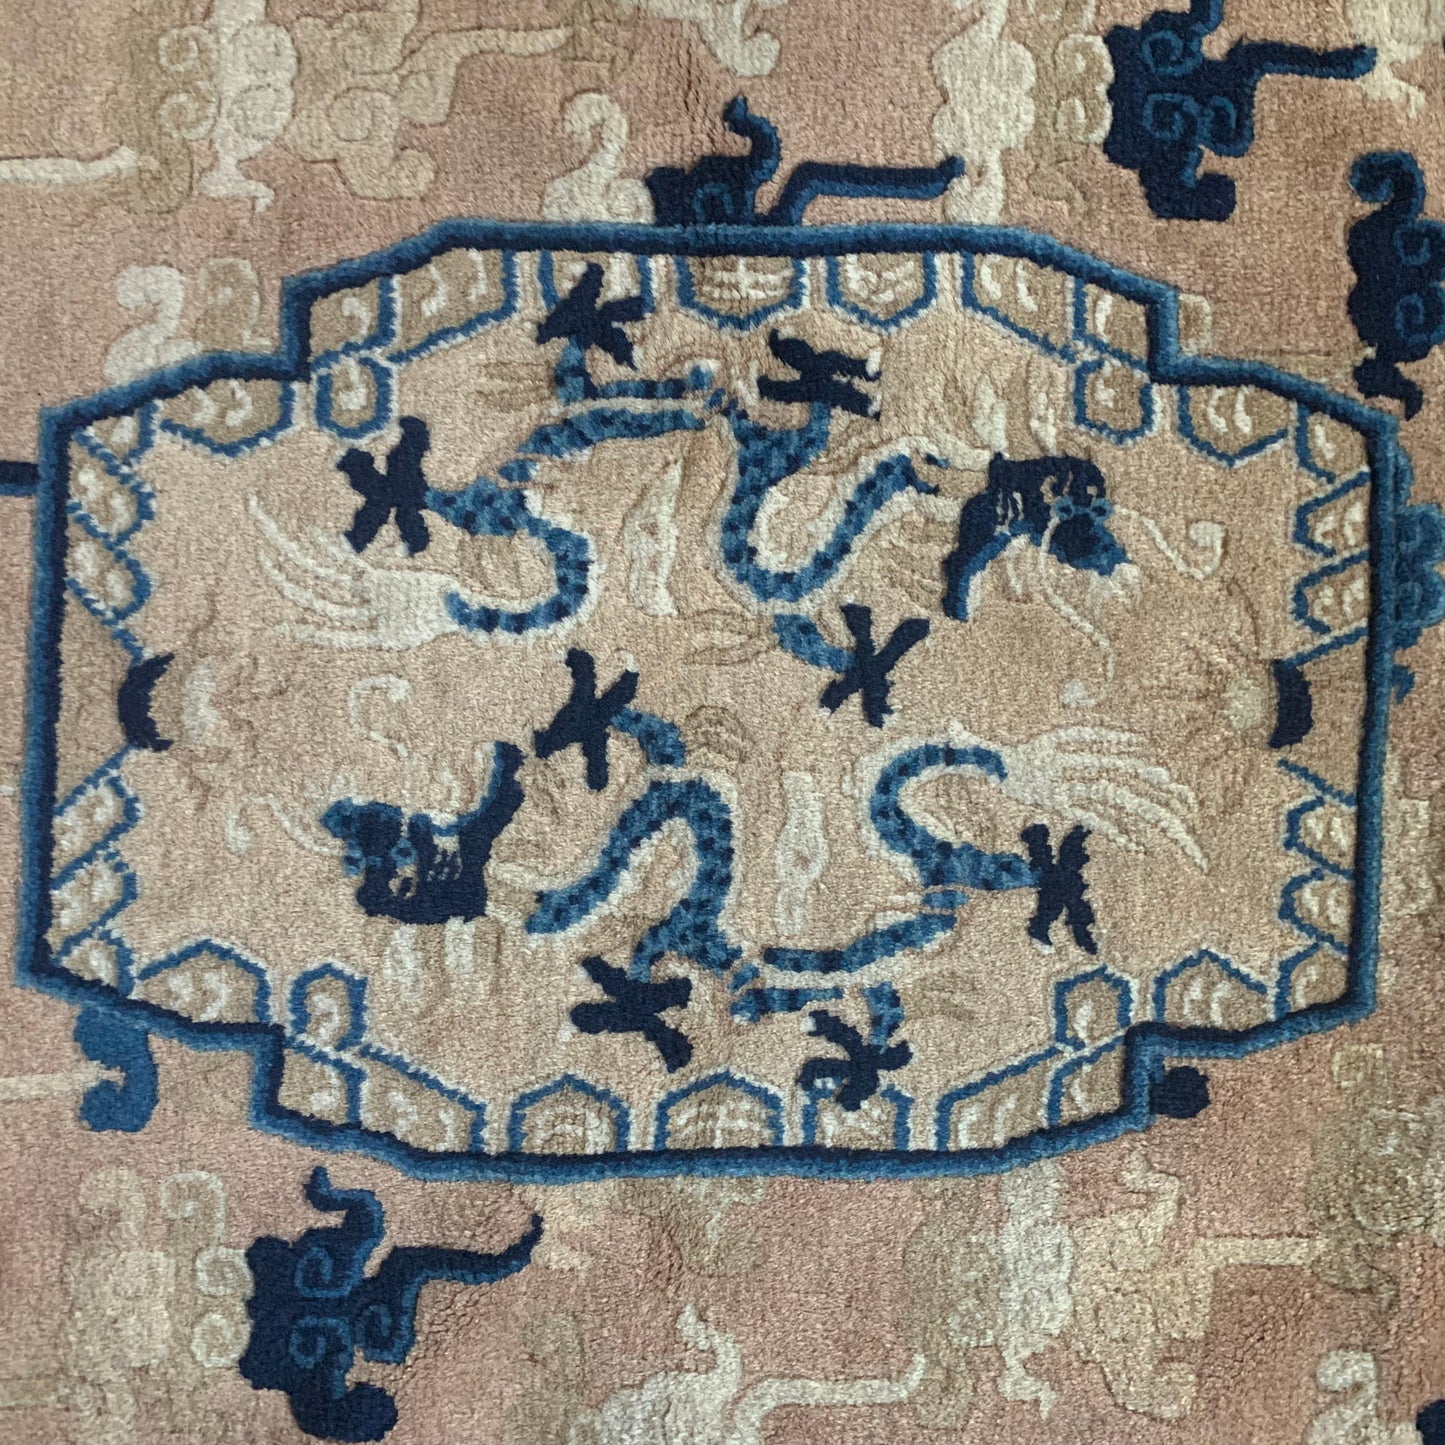 An antique ningxia carpet